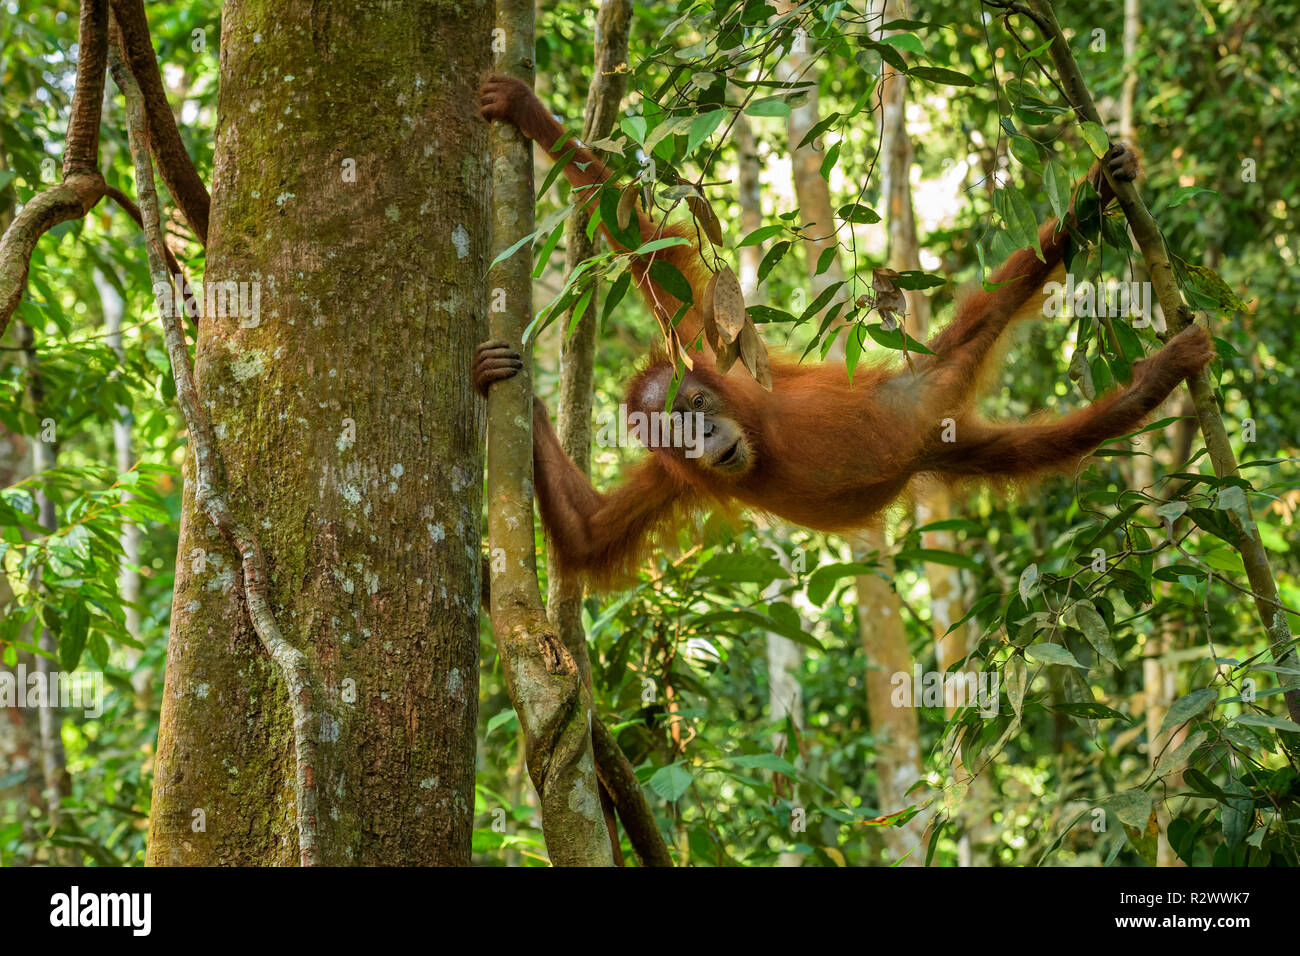 Sumatra Orang-Utan-Pongo abelii, Hominide Primaten Wälder von Sumatra, Indonesien. Stockfoto